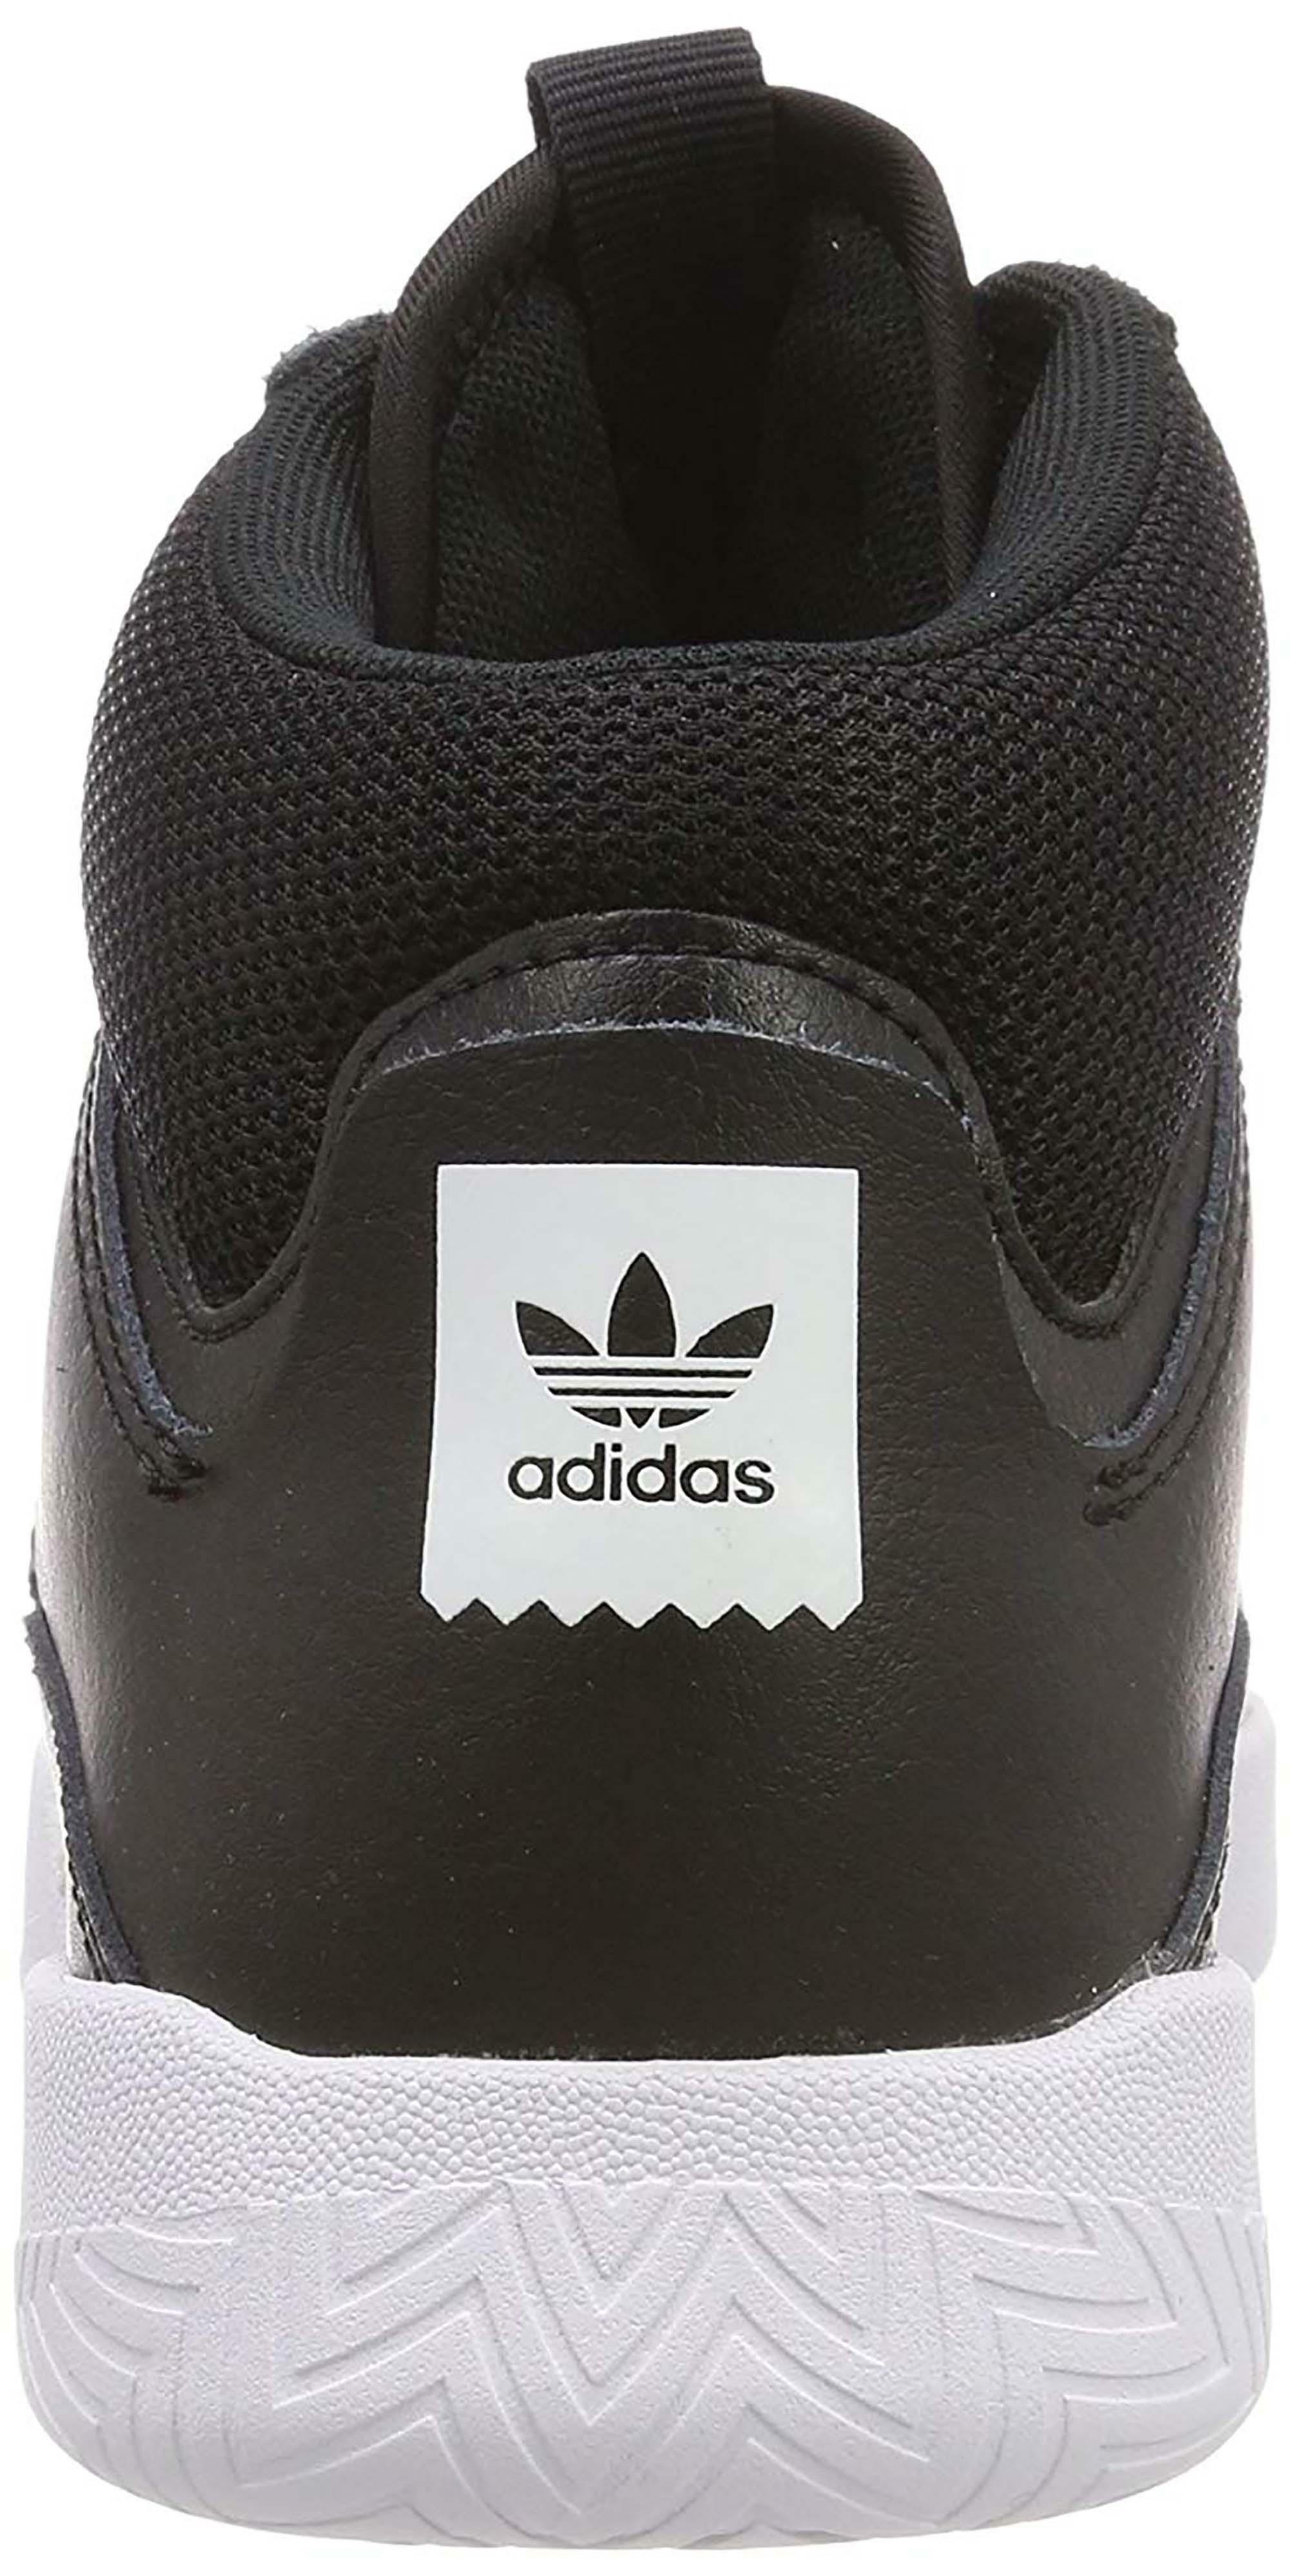 adidas originals adidas vrx mid scarpe sportive uomo nere b41479